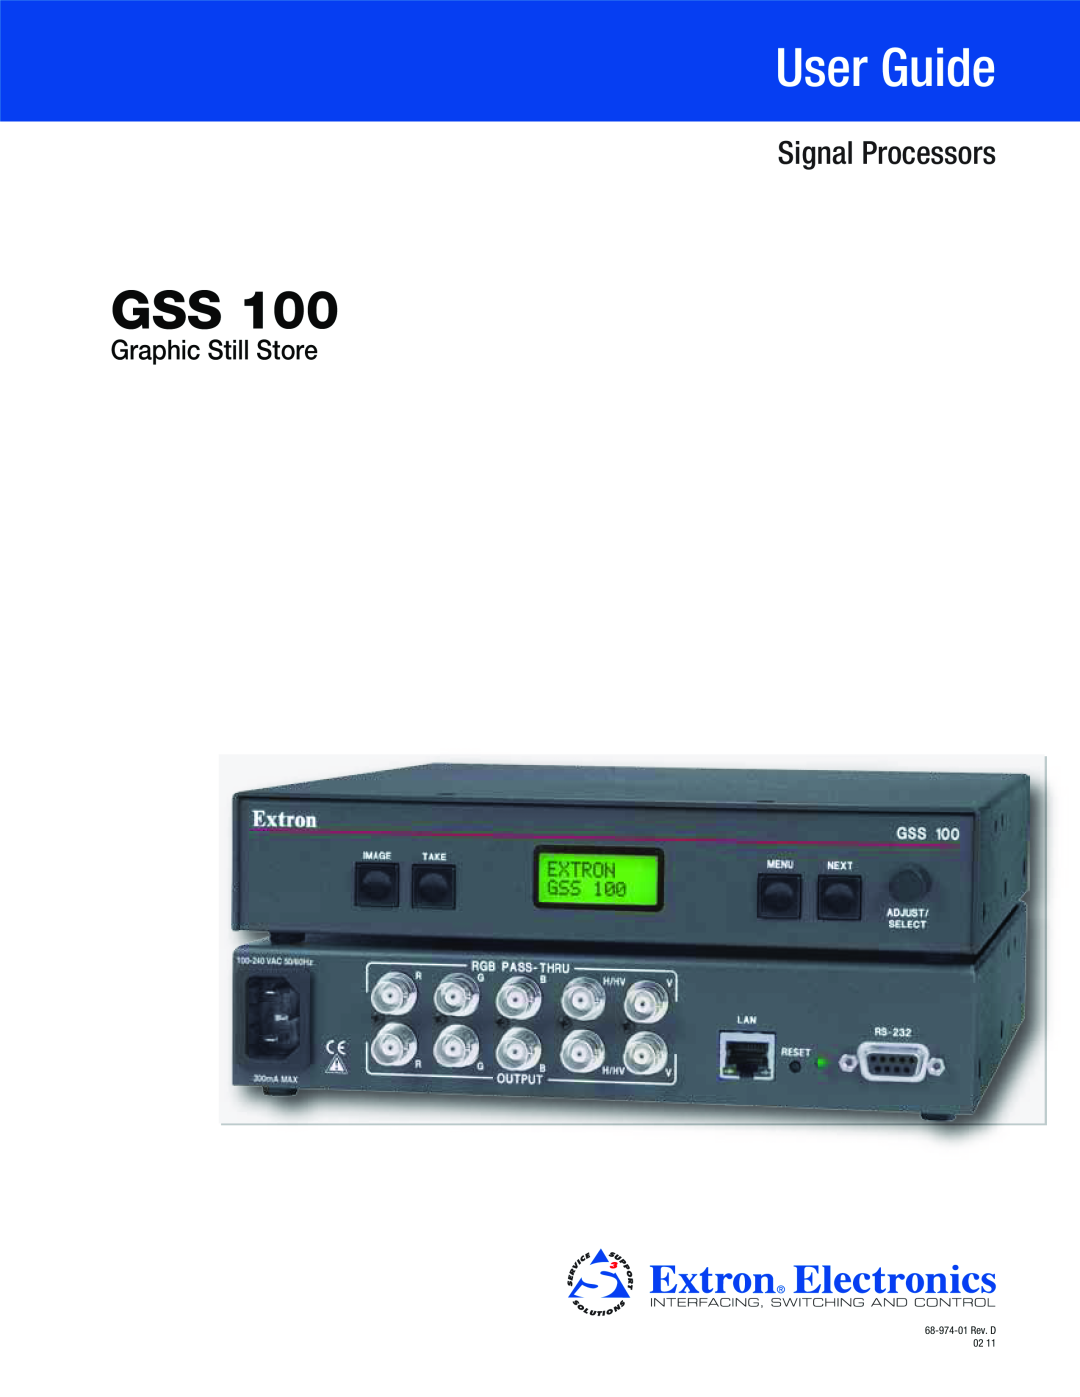 Extron electronic setup guide GSS 100 Setup Guide, Connections, Controls and Indicators, C D E 